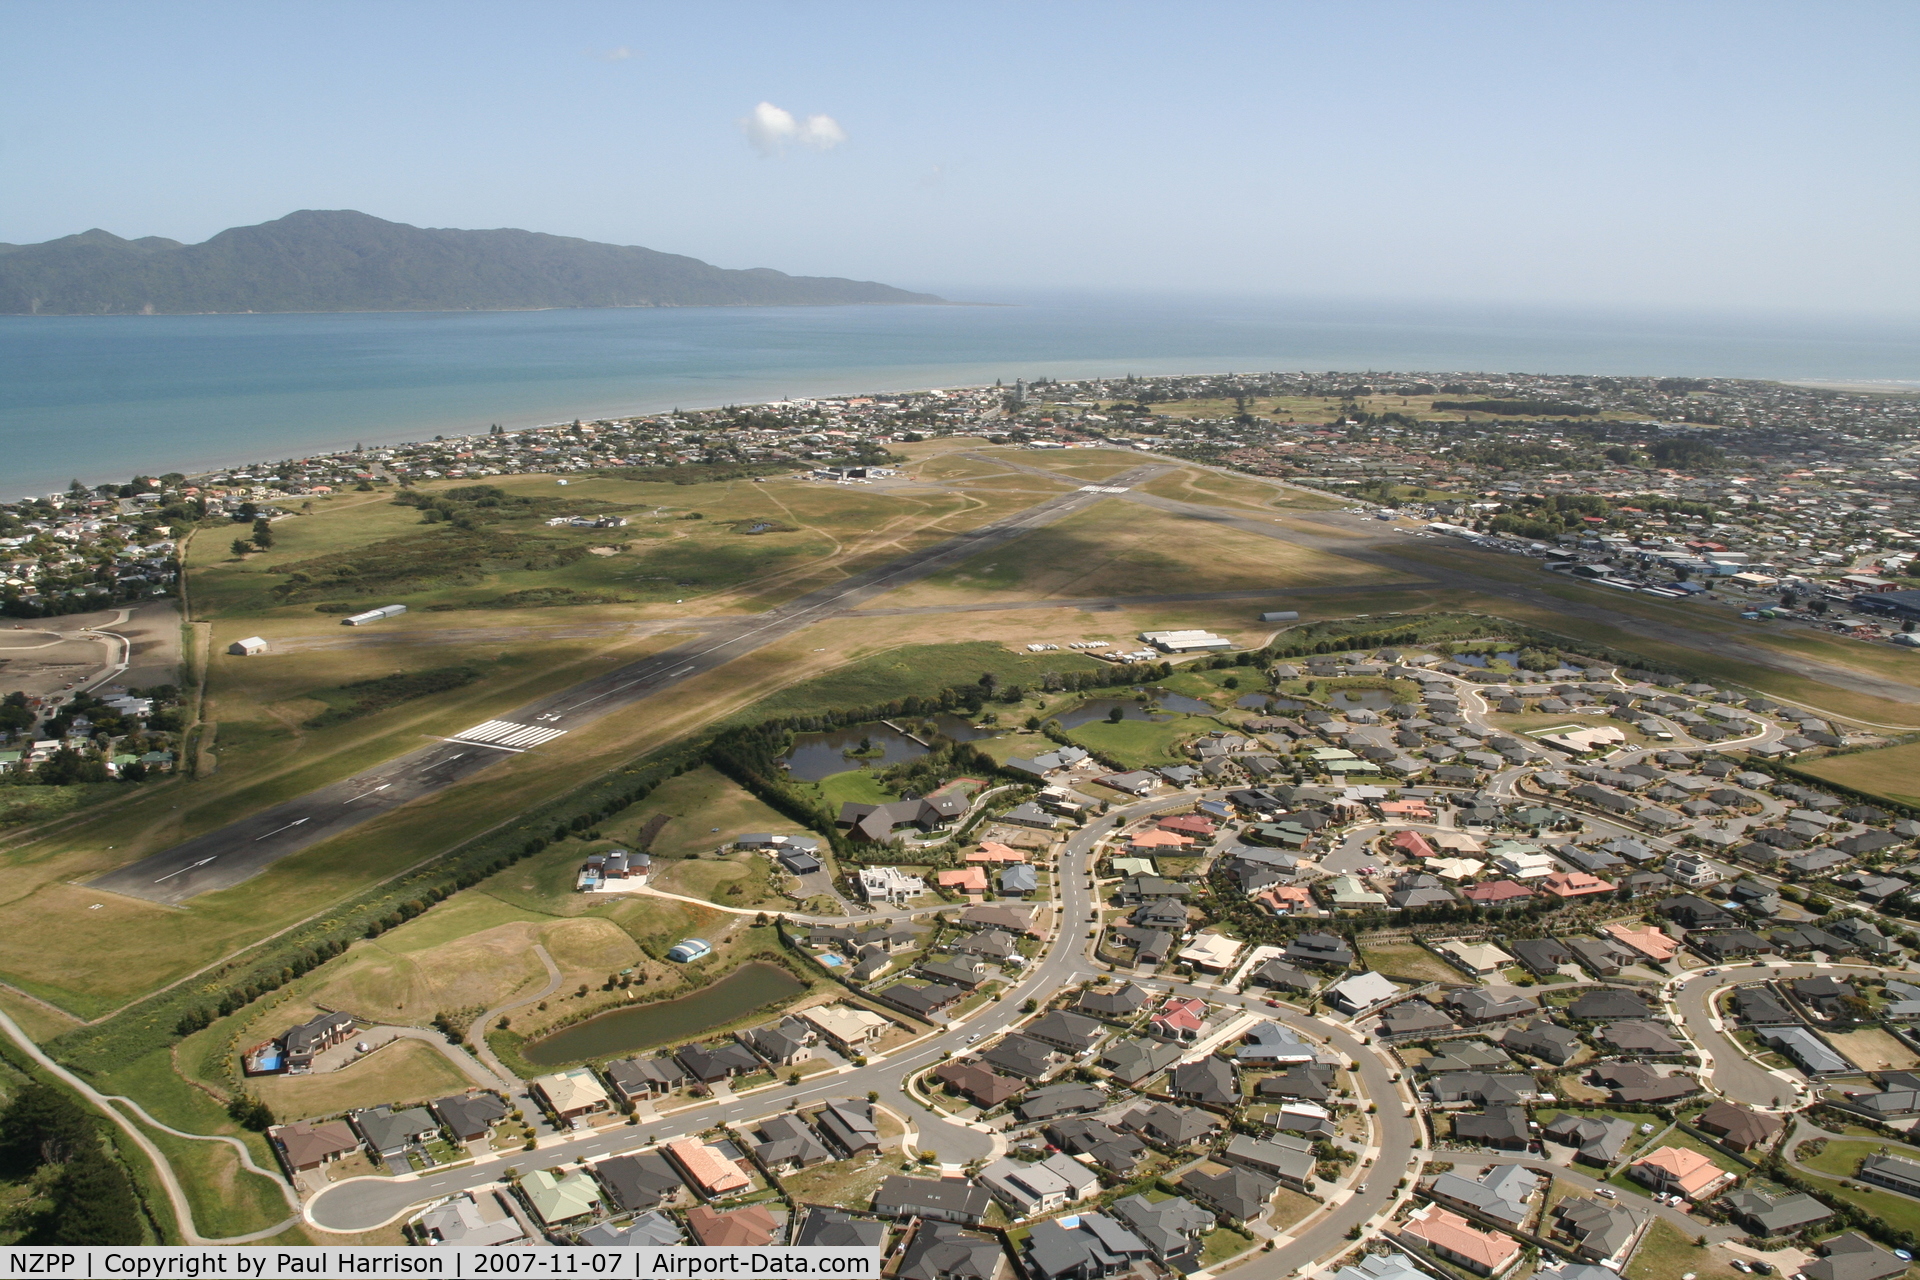 Paraparaumu Airport, Paraparaumu New Zealand (NZPP) - Paraparaumu airport